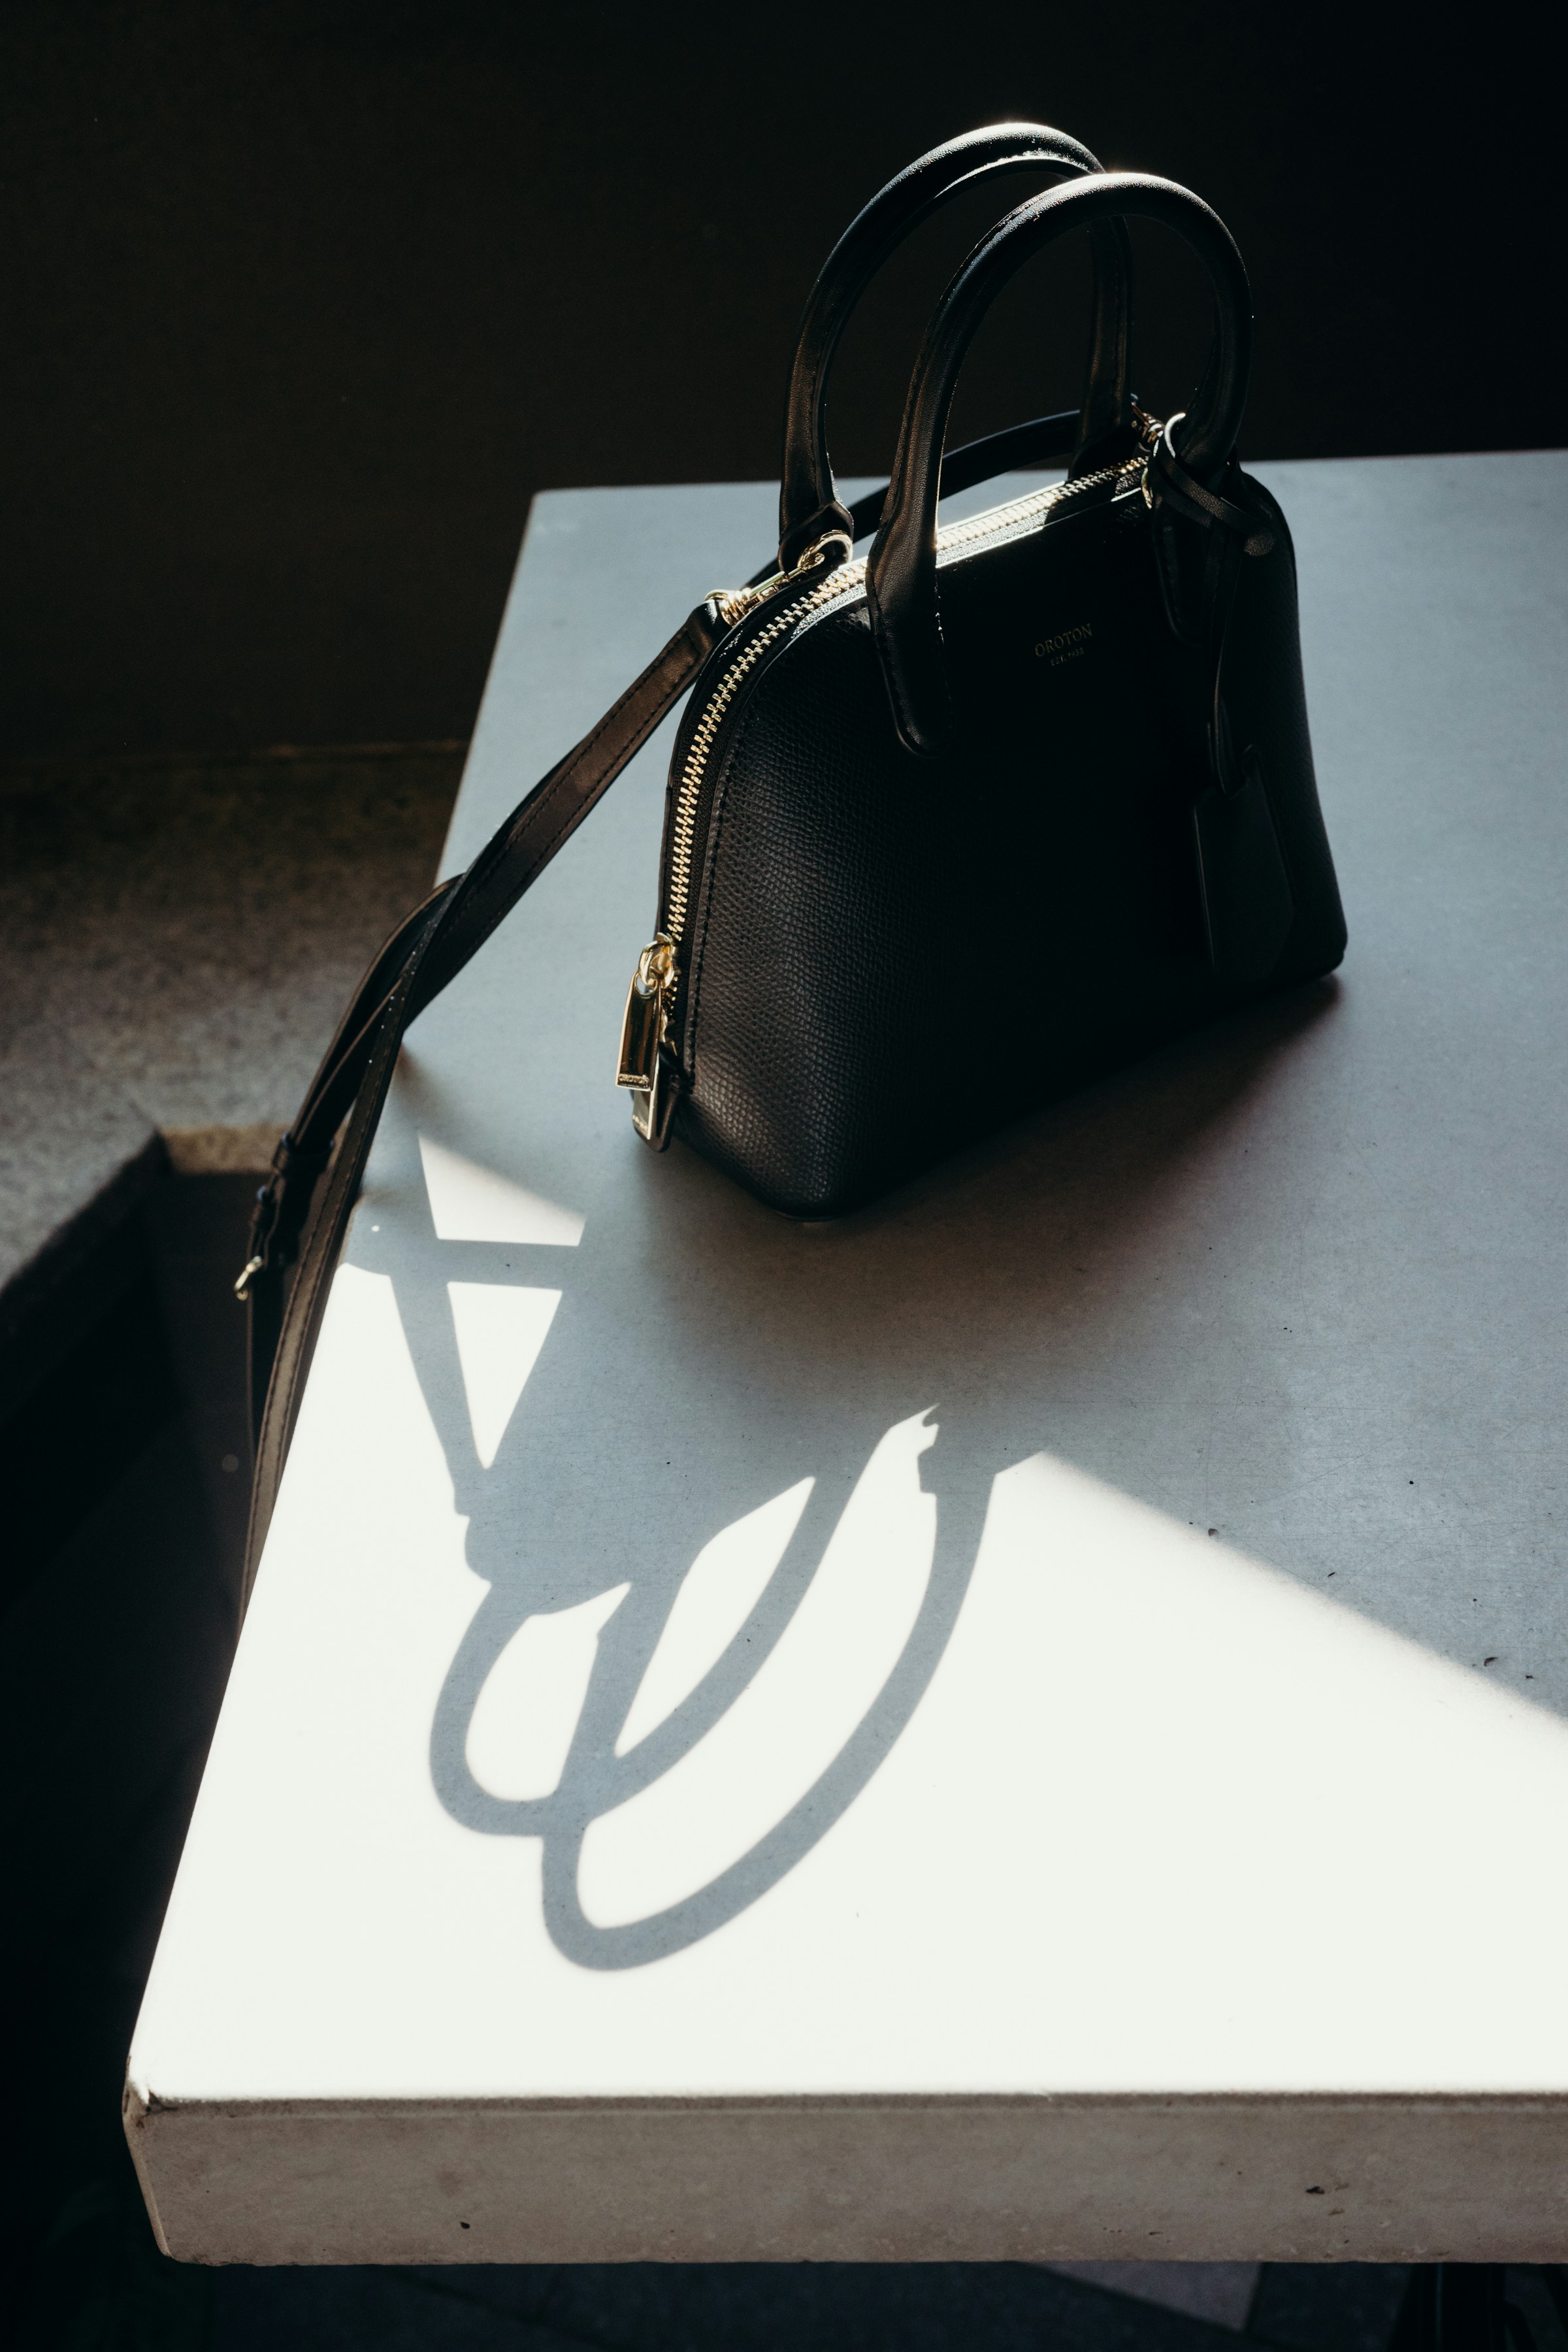 A black handbag on a table | Source: Unsplash